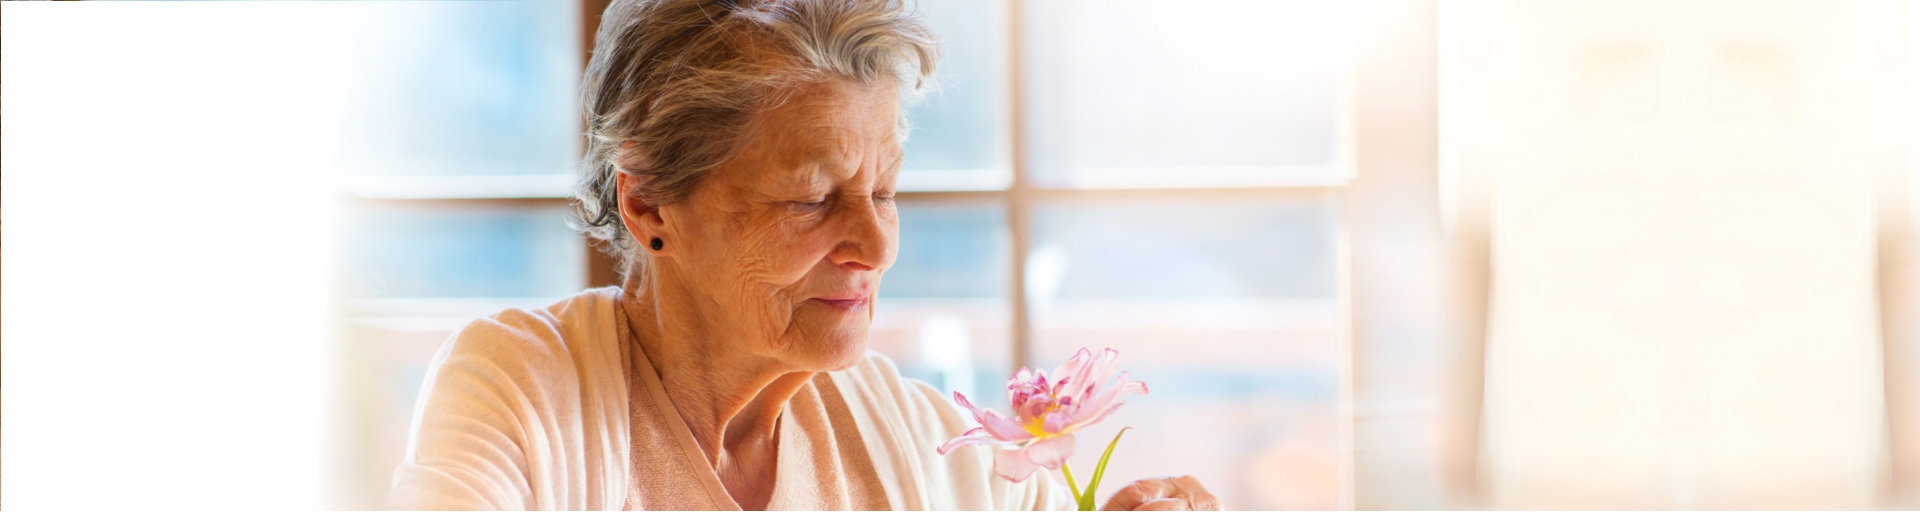 an elderly woman smelling a flower